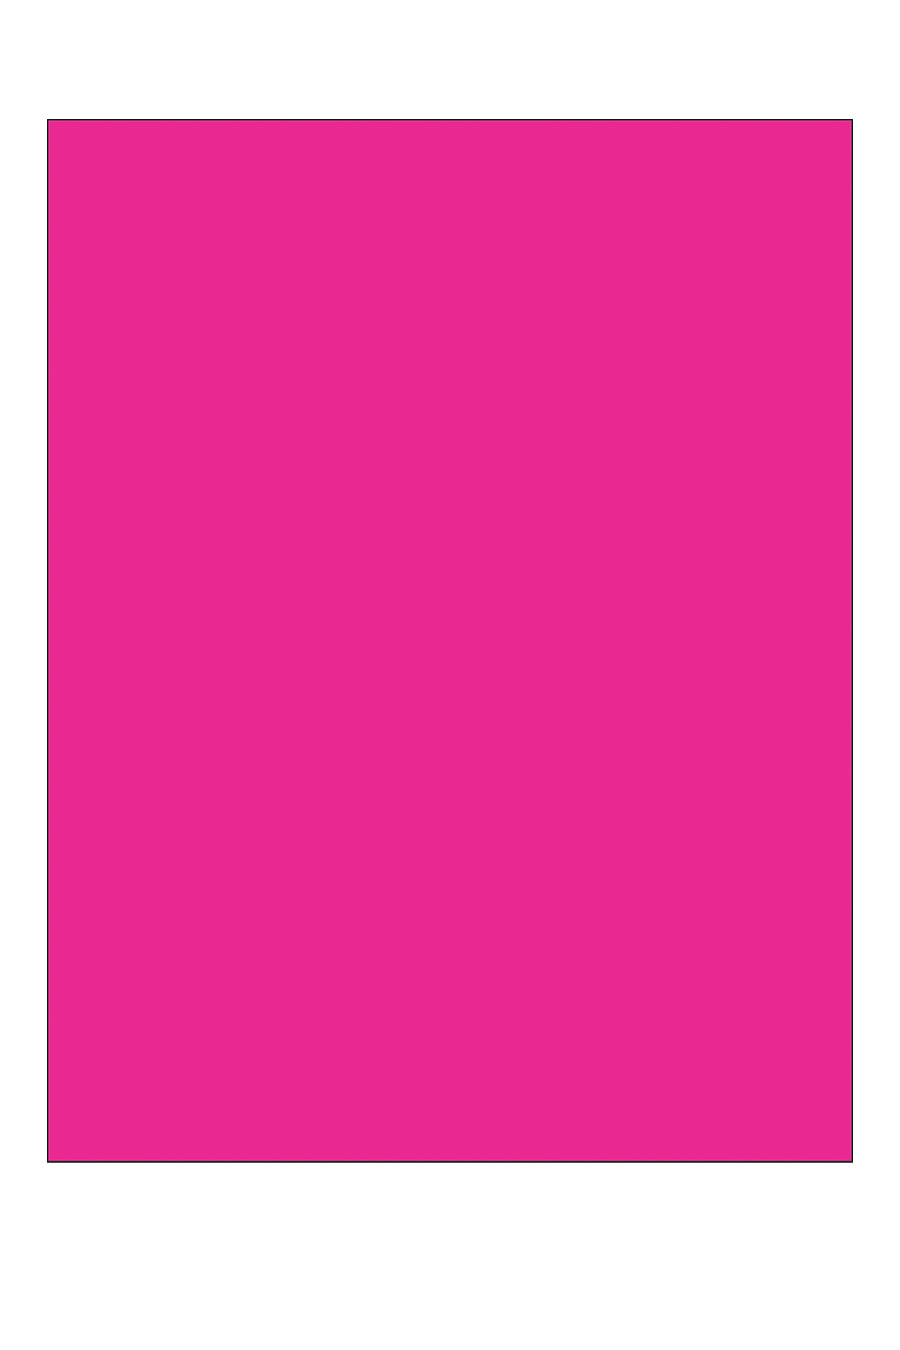 Laser Pink Neon Labels, 8-1/2" x 11", 1/Sheet, 25 Sheets/Pk